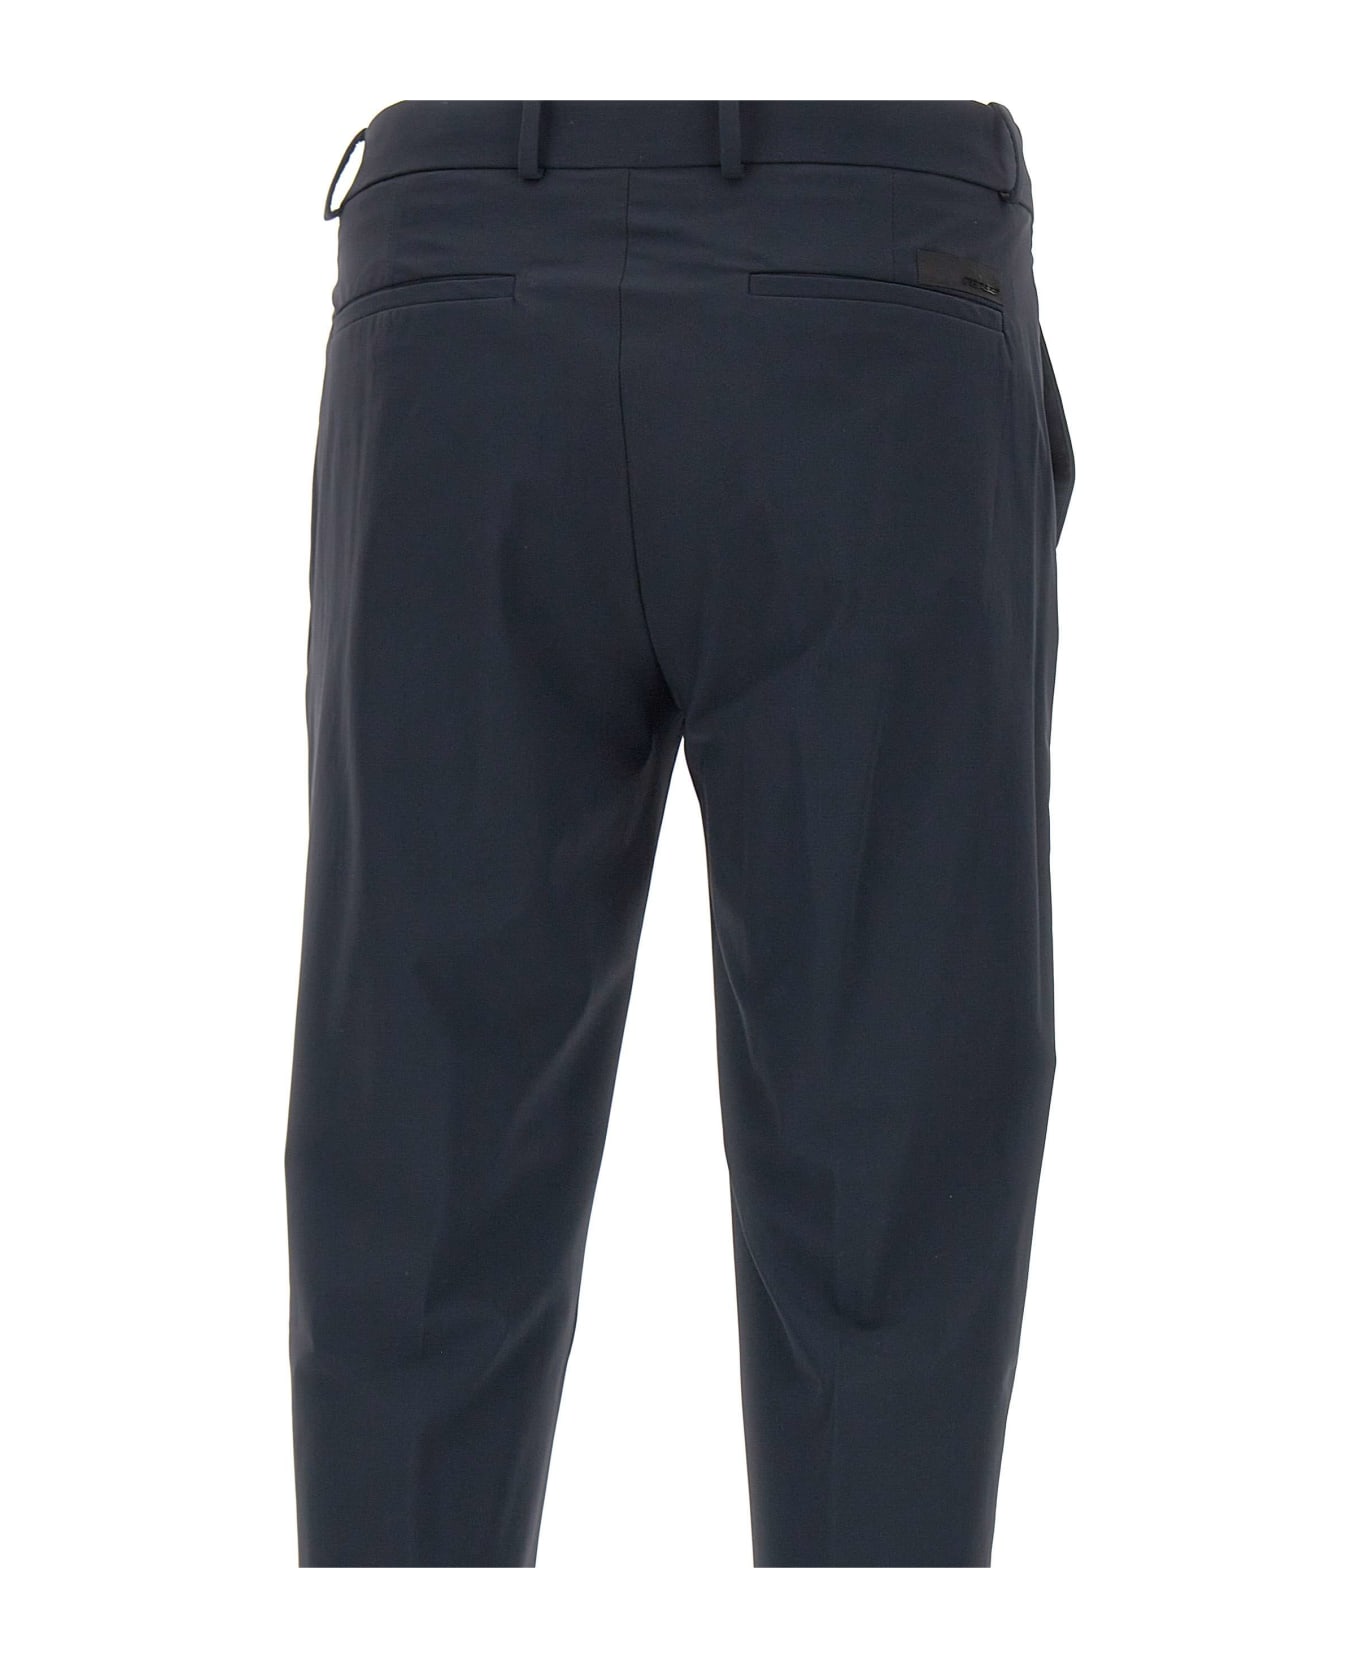 RRD - Roberto Ricci Design Men's Trousers 'revo Chino' - Blu Navy